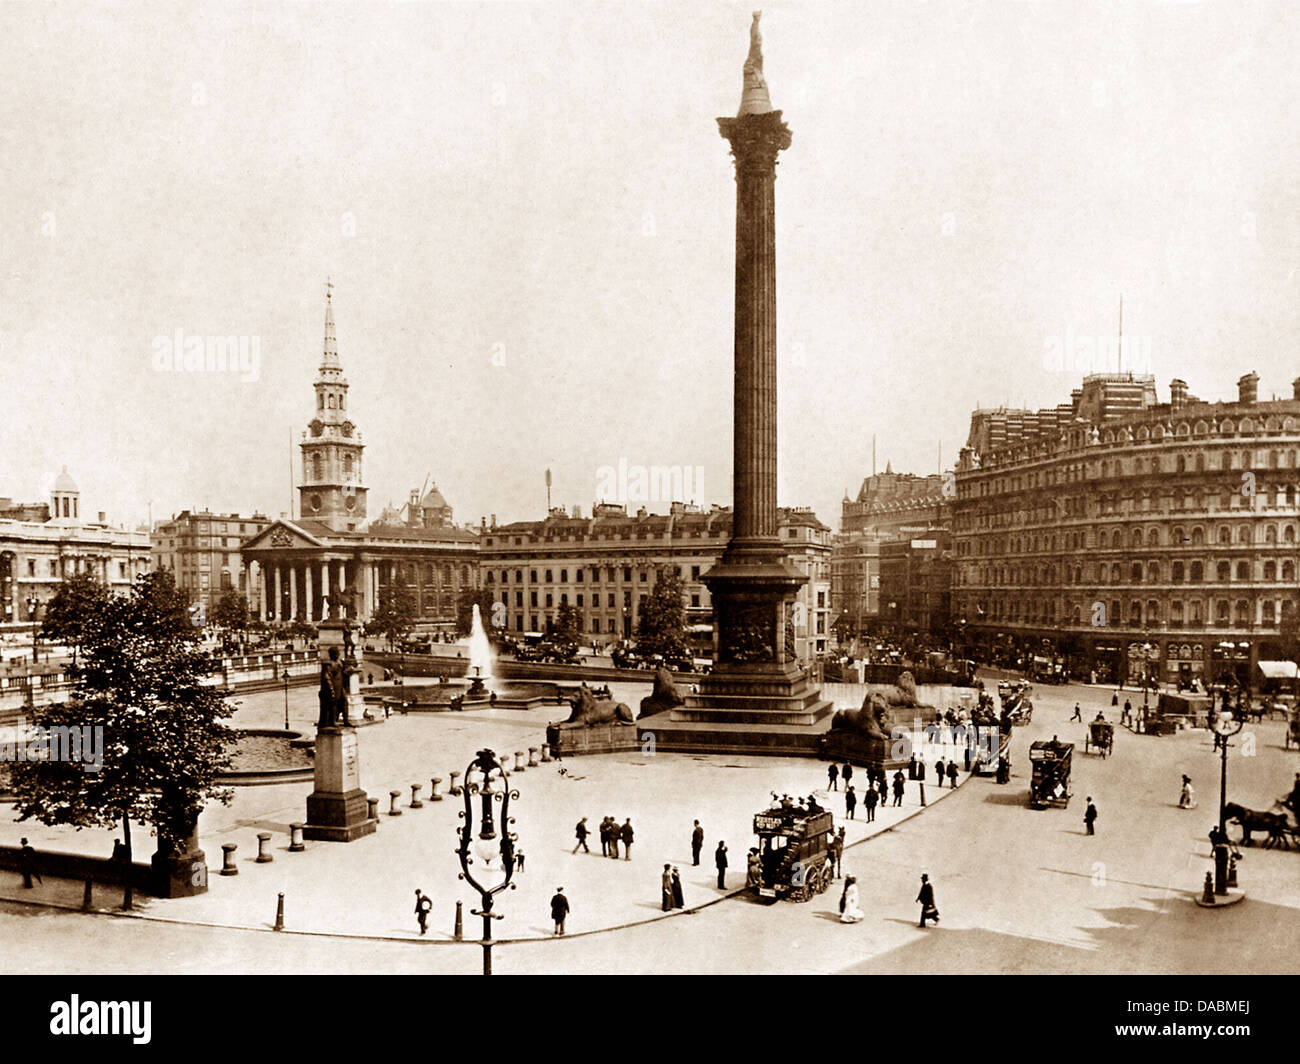 Londra Trafalgar Square periodo Vittoriano Foto Stock